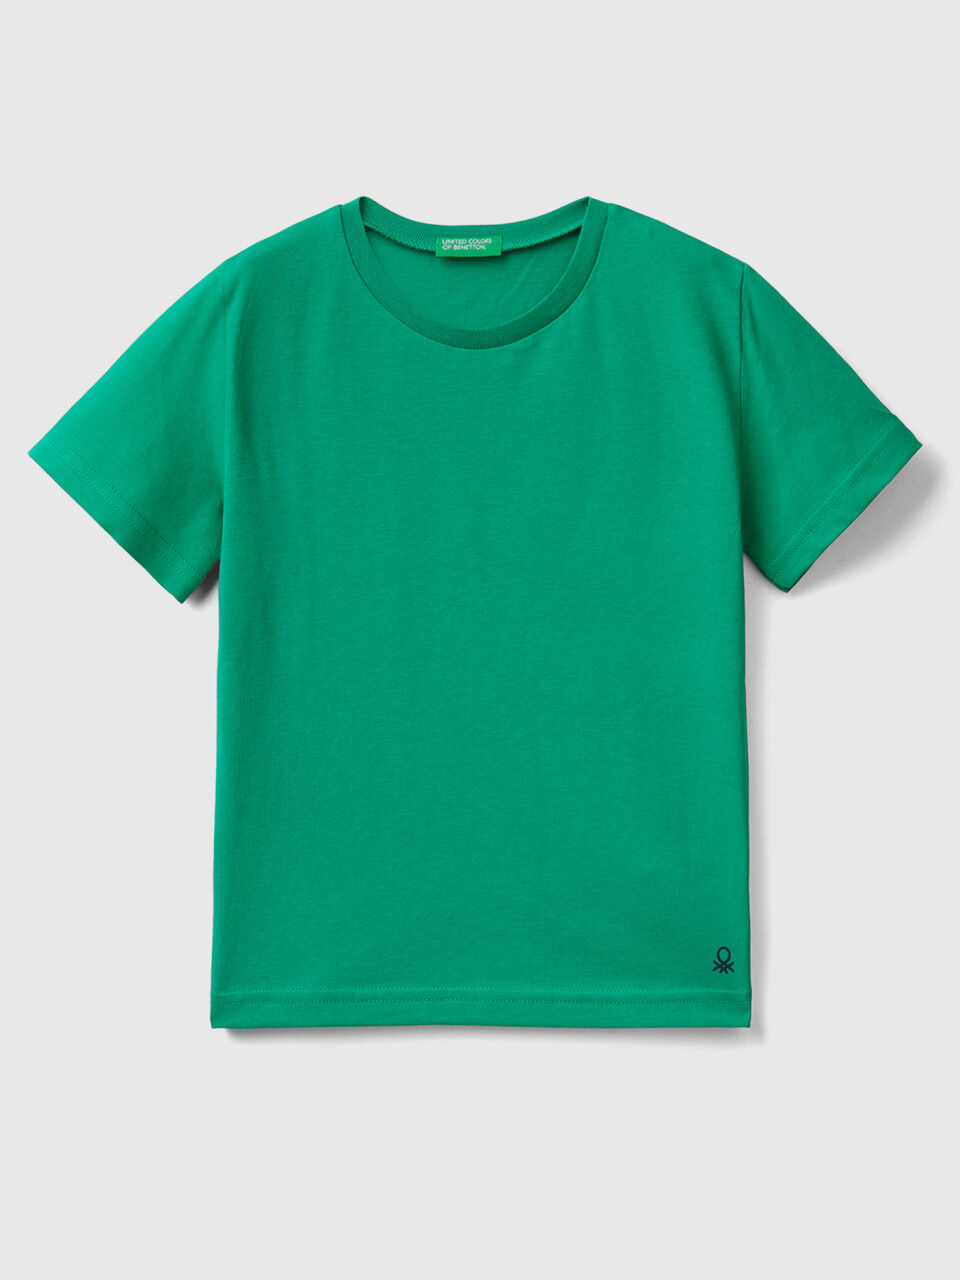 T-shirt in organic cotton